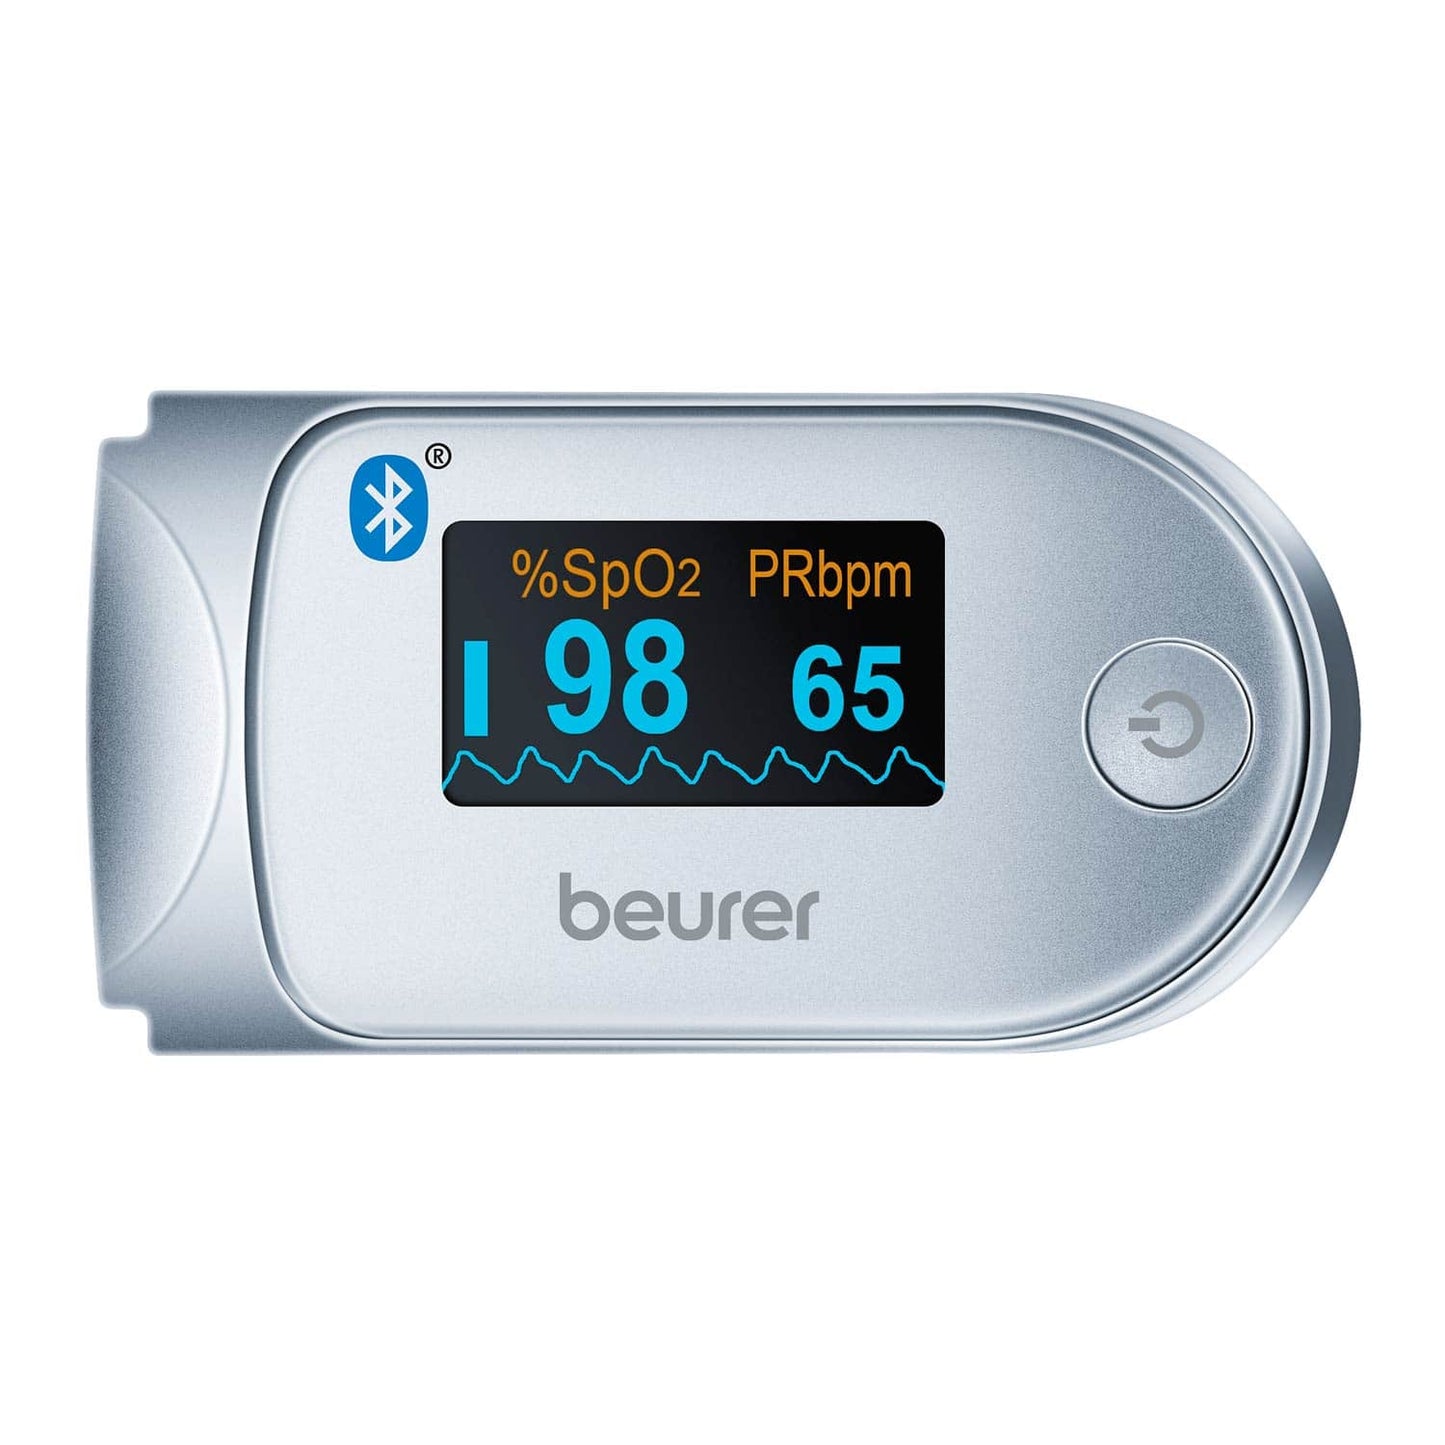 Beurer Po 60  Bluetooth® Pulse Oximeter For Determining Arterial Oxygen Saturation